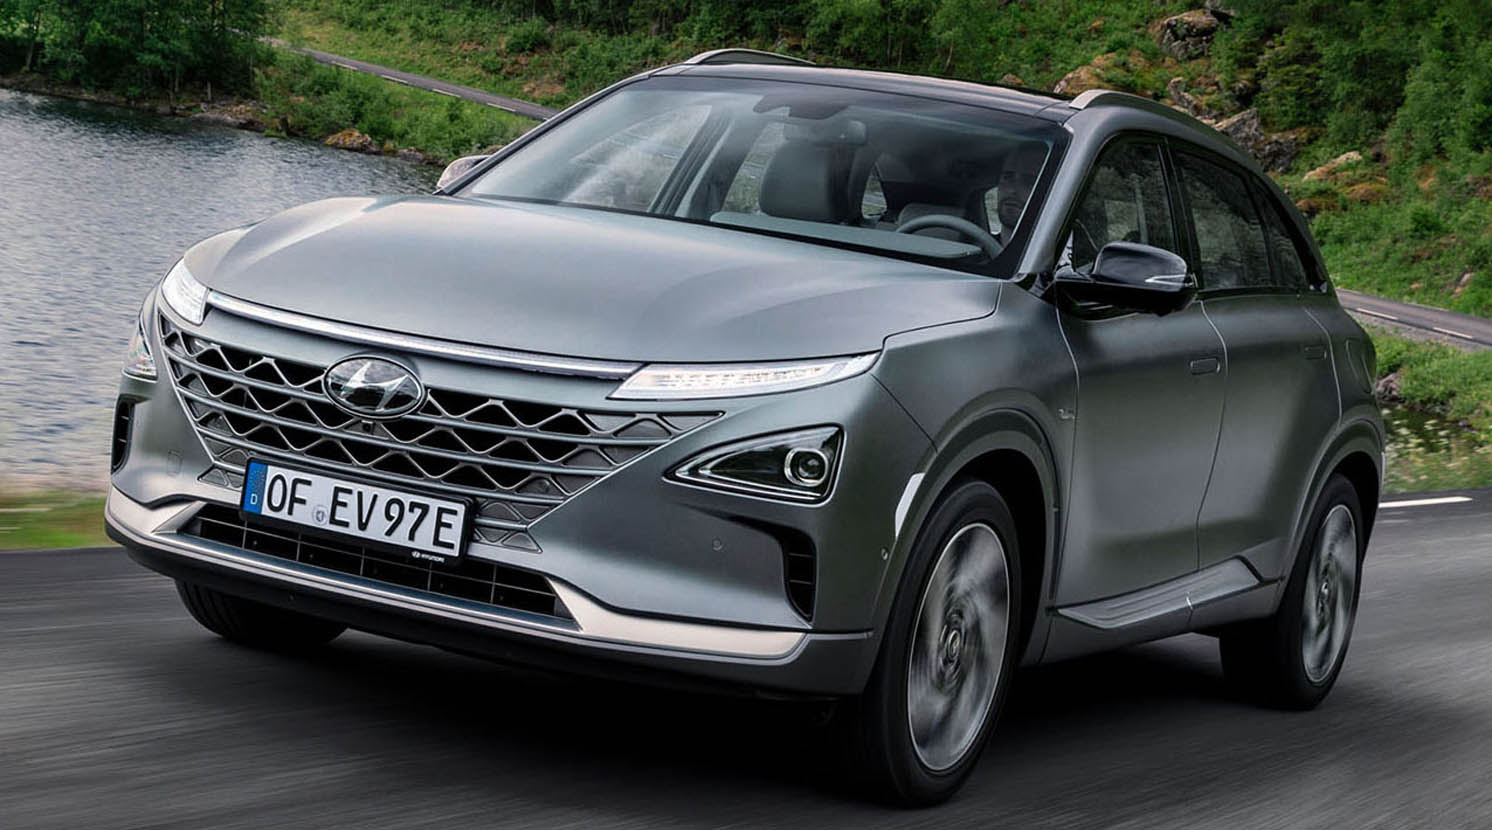 Hyundai Nexo Wins The Best Alternative Energy Vehicle Of The Year Award